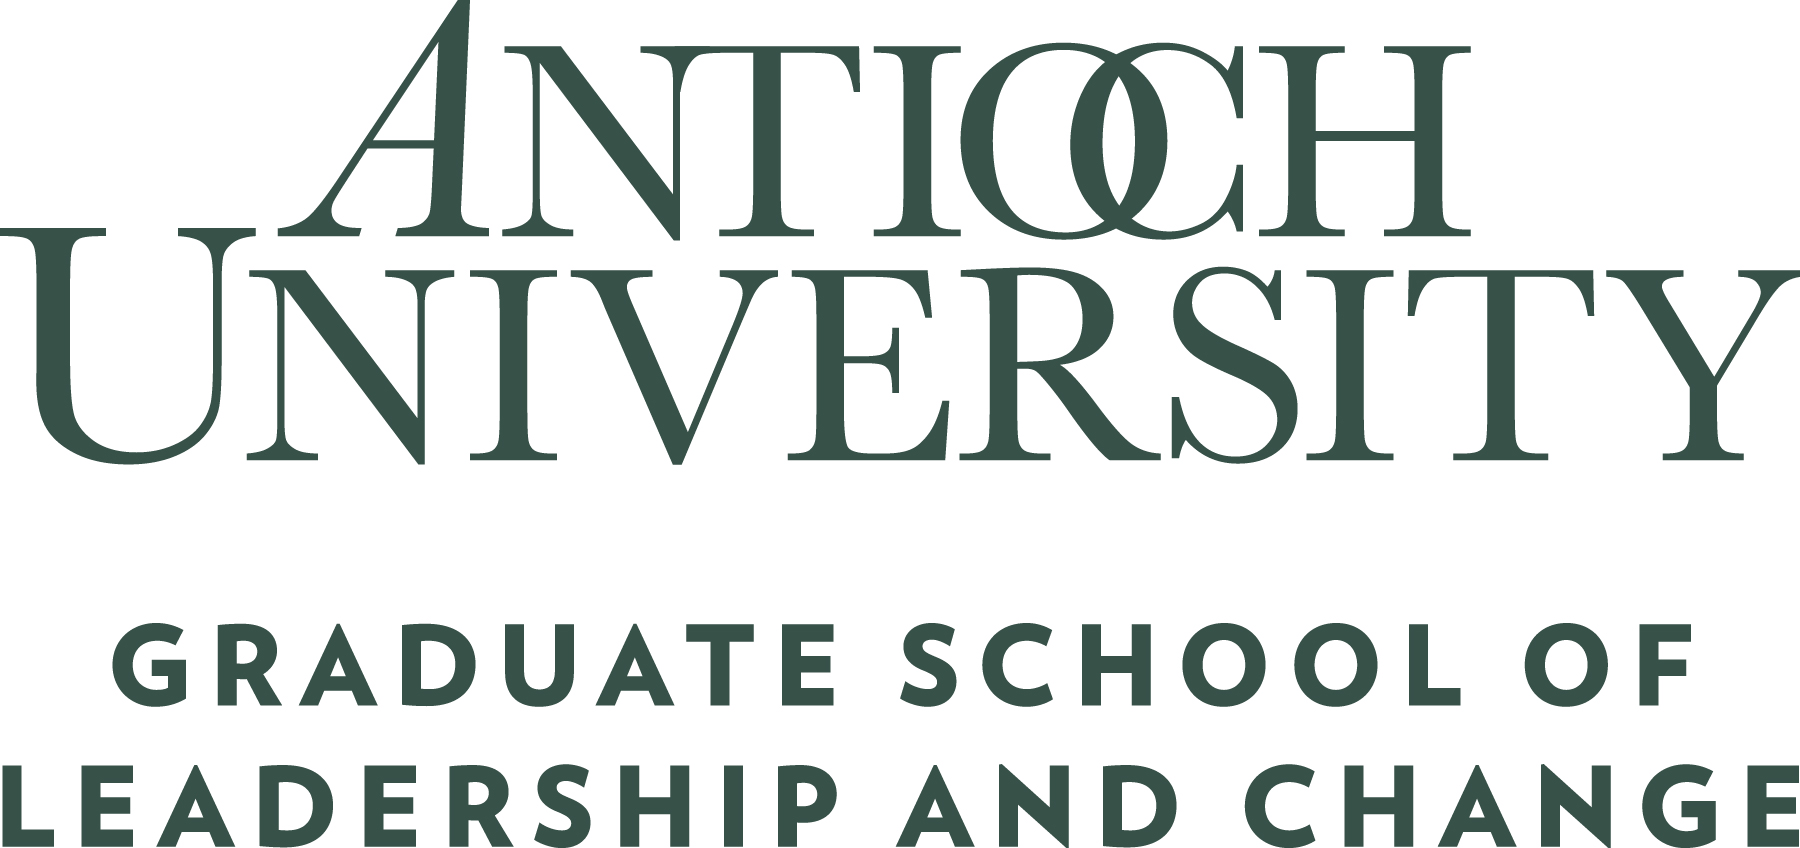 Antioch University - Graduate School of Leadership and Change Logo